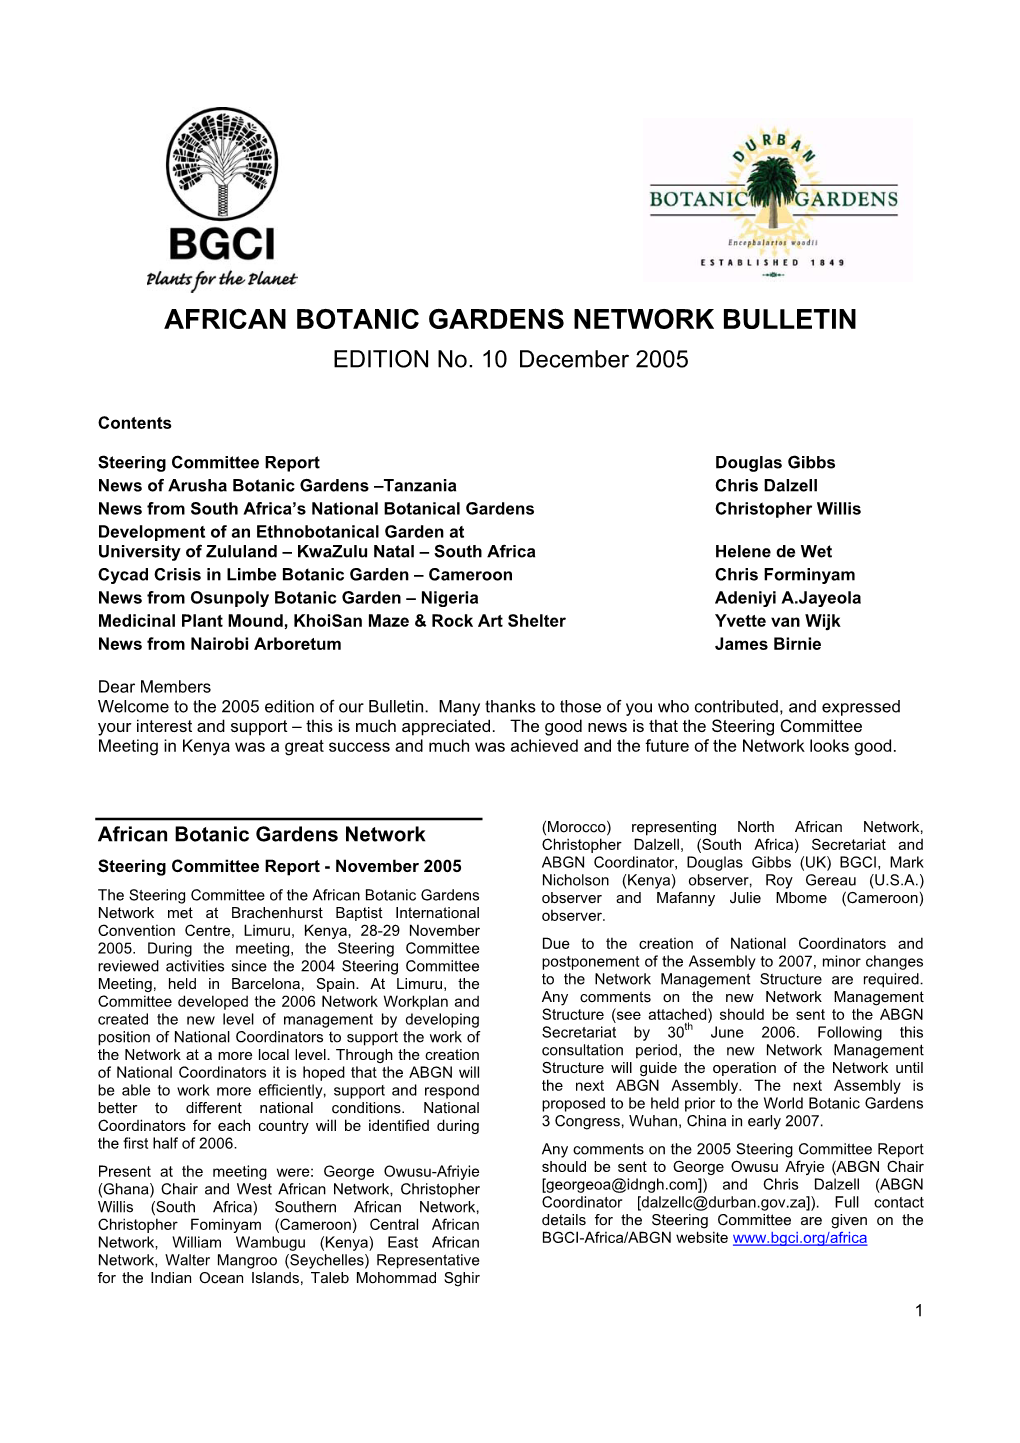 AFRICAN BOTANIC GARDENS NETWORK BULLETIN EDITION No